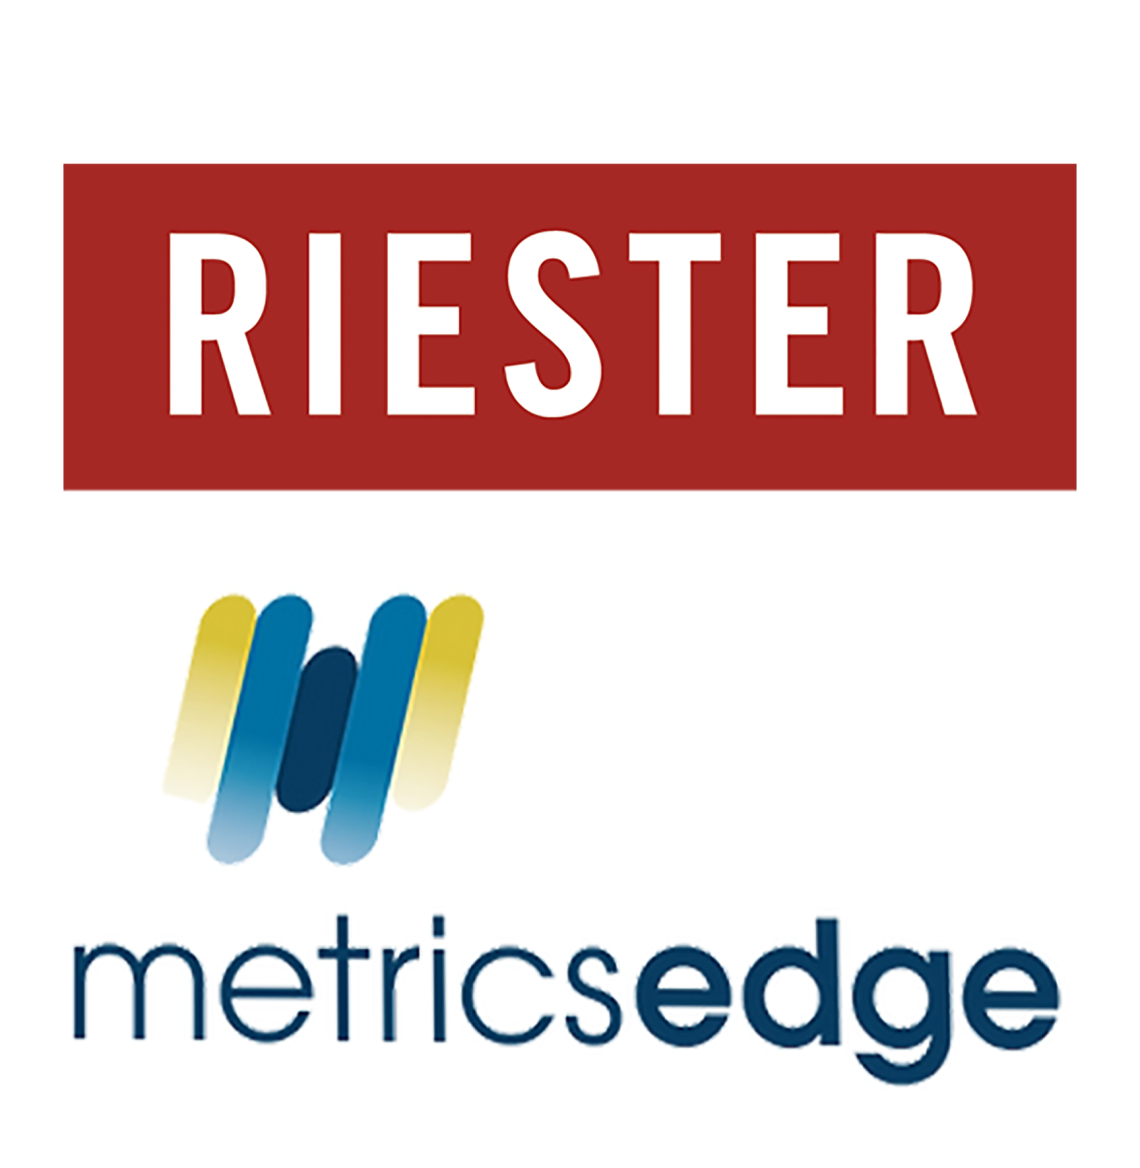 Reister and MetricsEdge logos